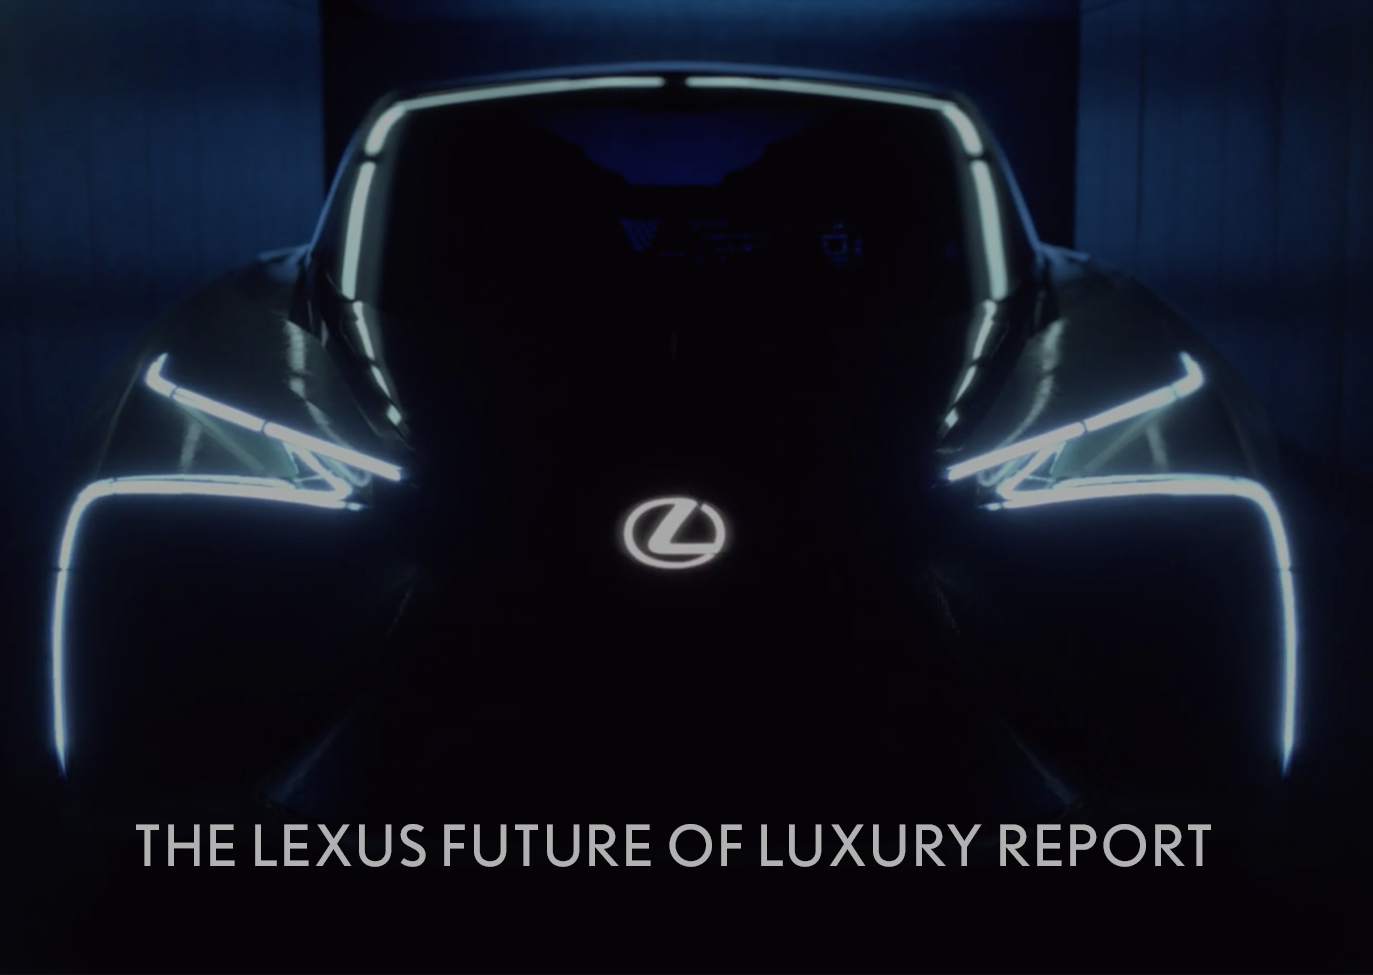 Lexus' VP of Marketing, Lisa Materazzo, on the Future of Luxury